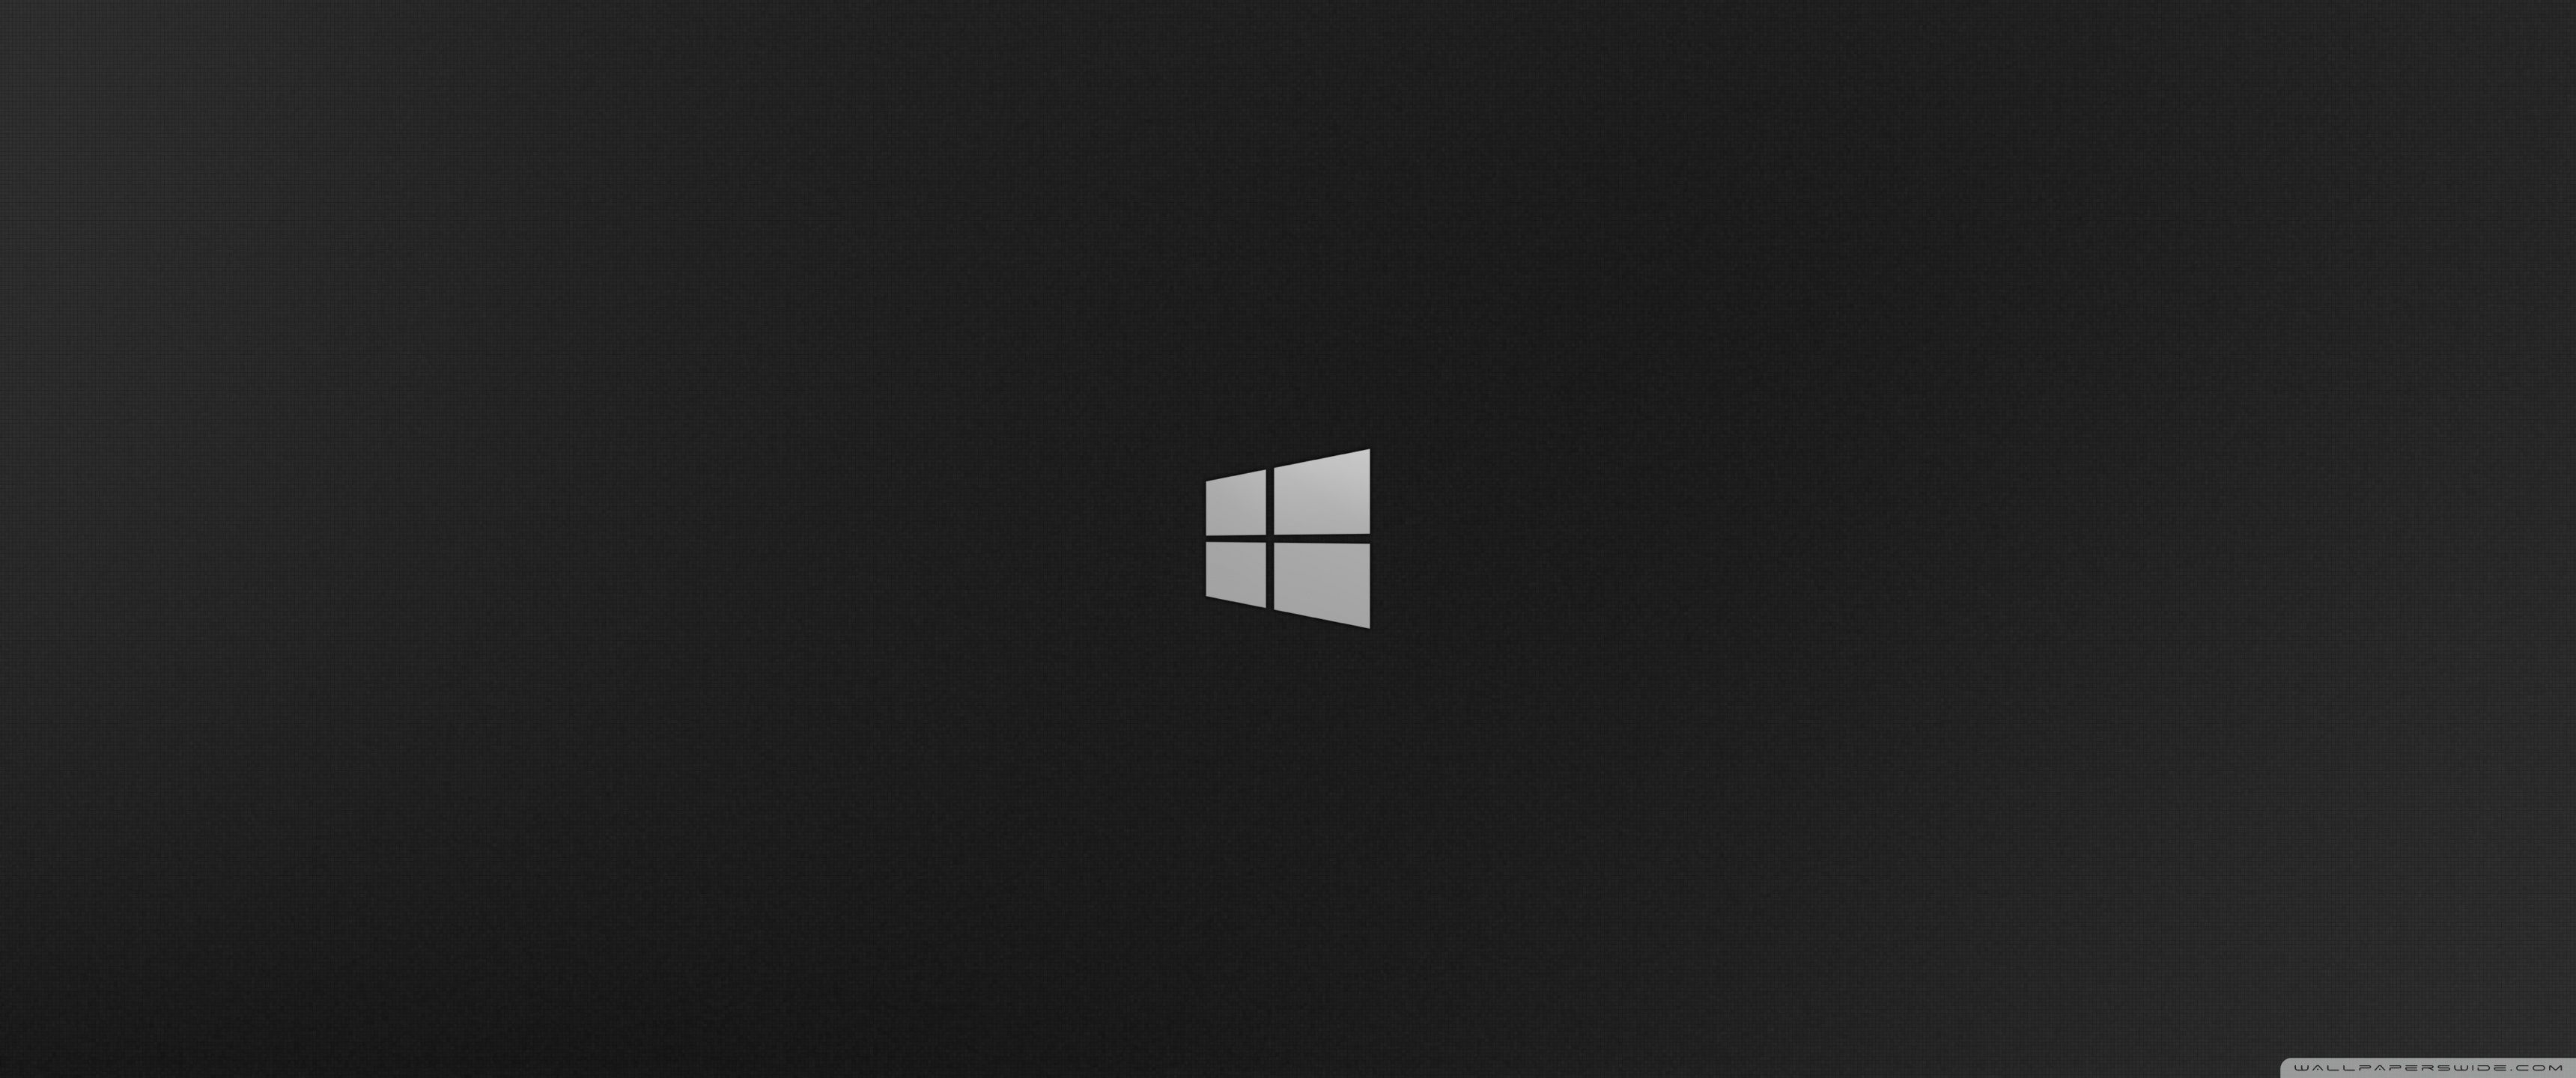 Windows 10 Wallpaper 3440 X 1440